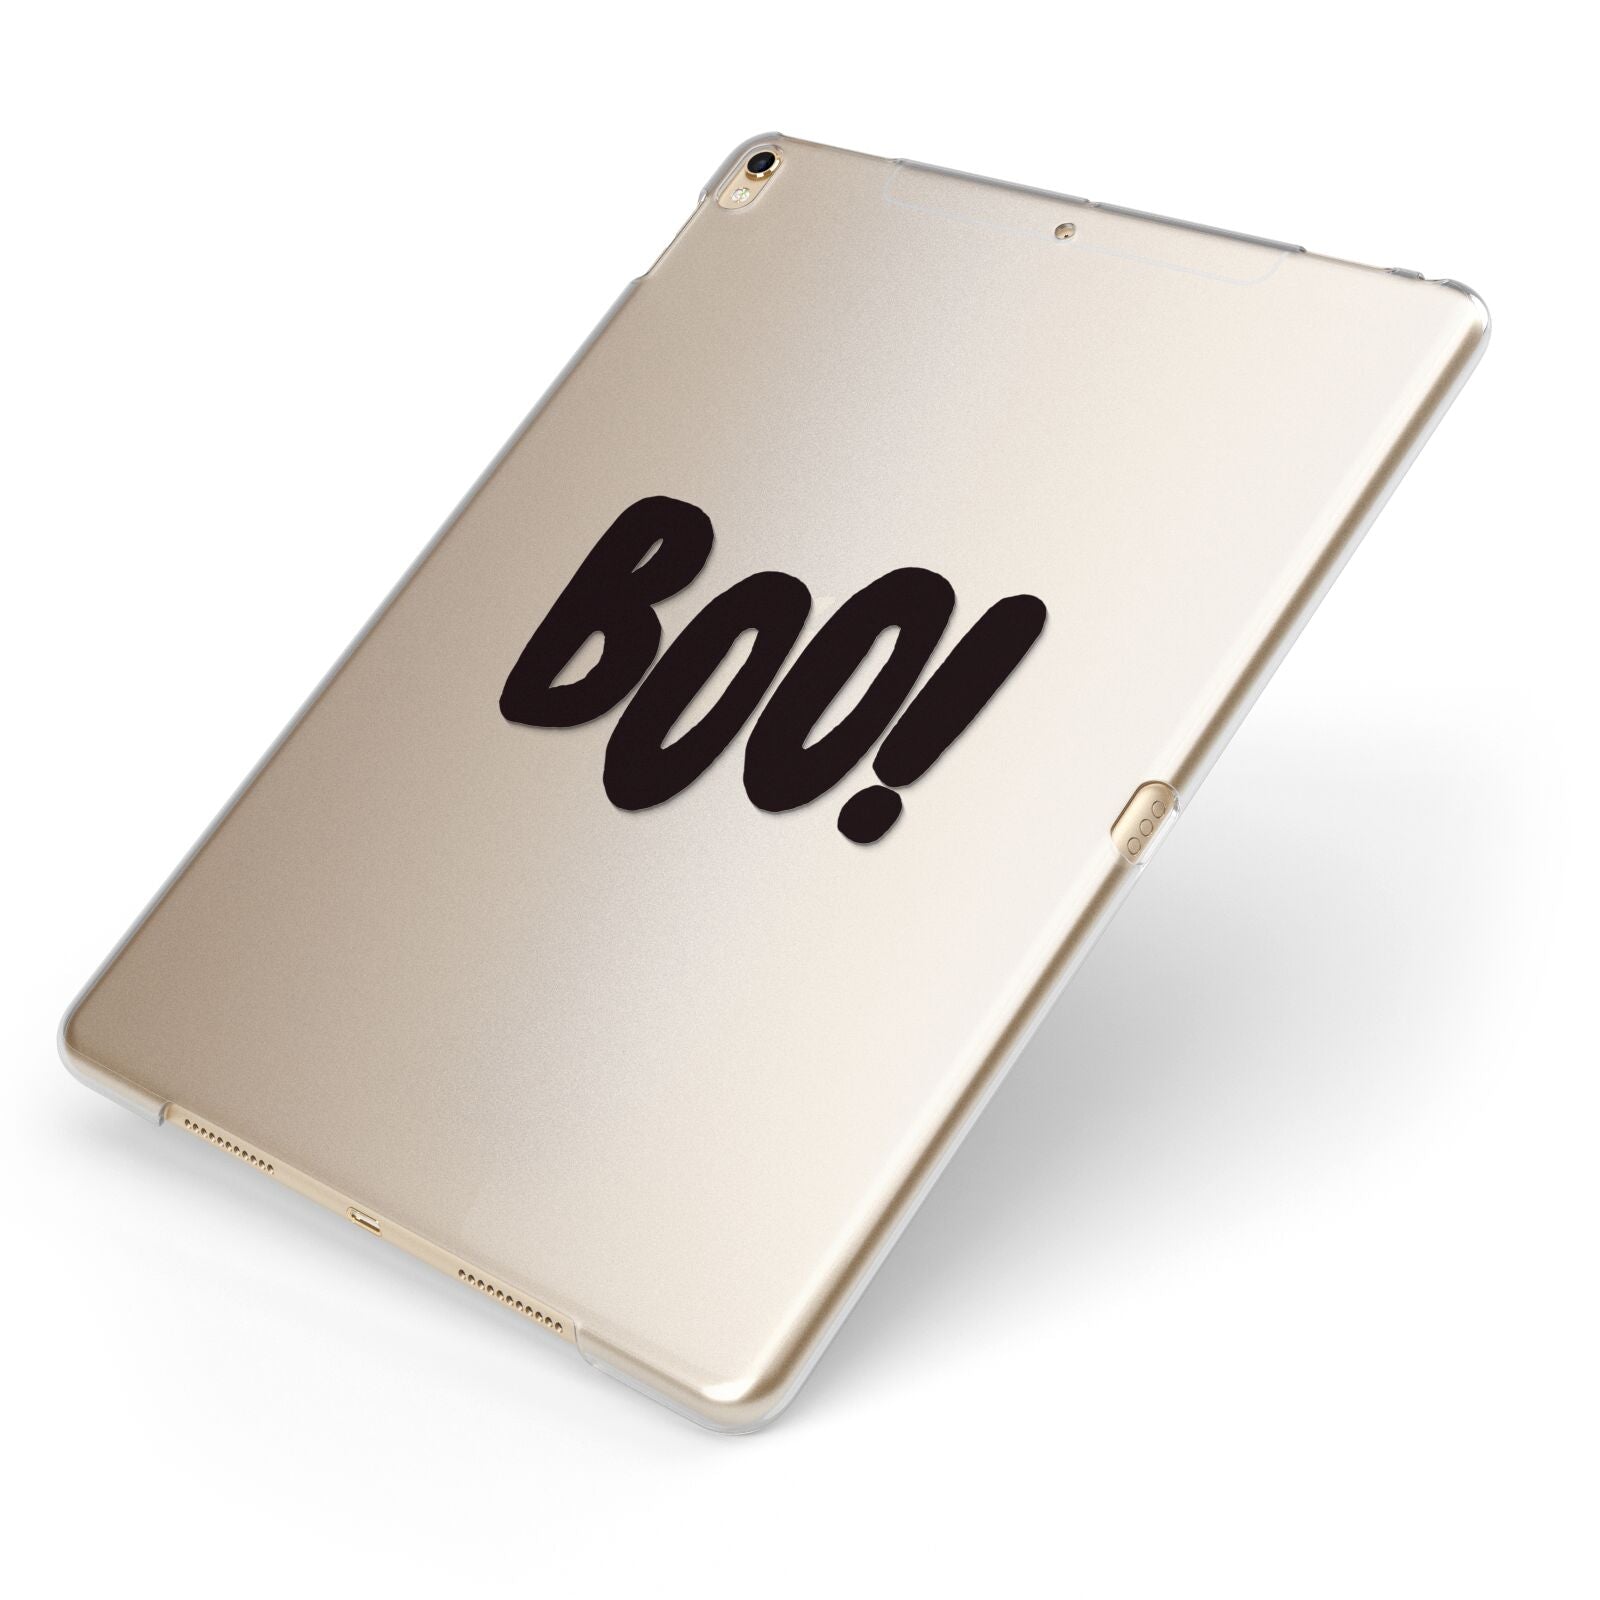 Boo Black Apple iPad Case on Gold iPad Side View